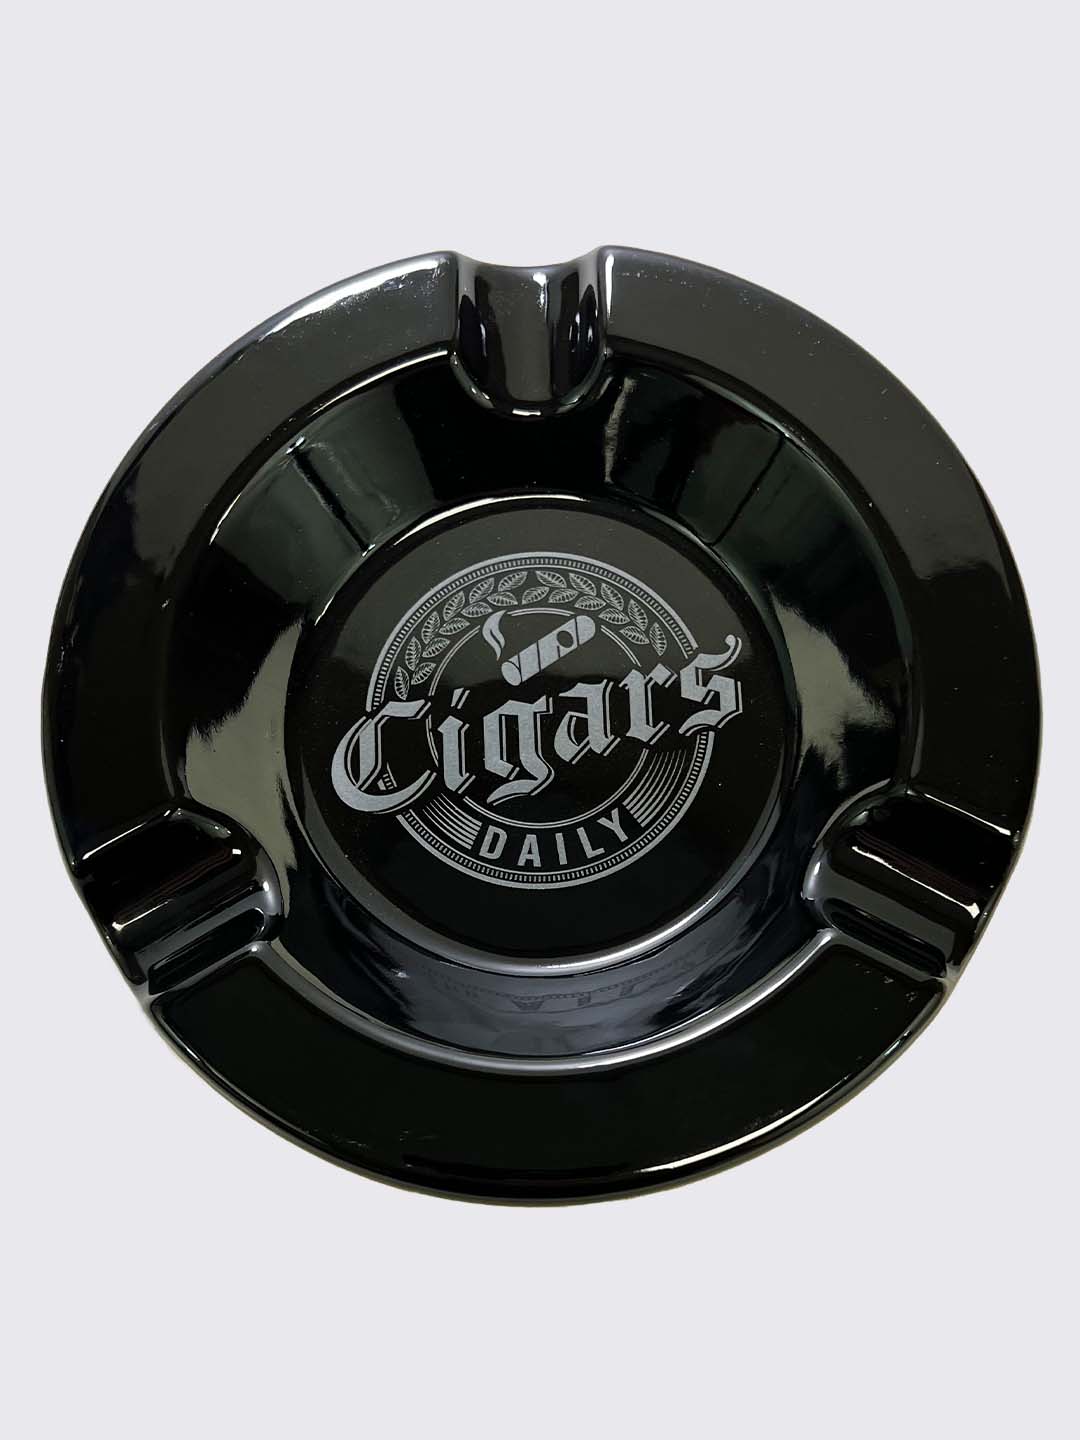 Cigars Daily 3-Cigar Ceramic Ashtray